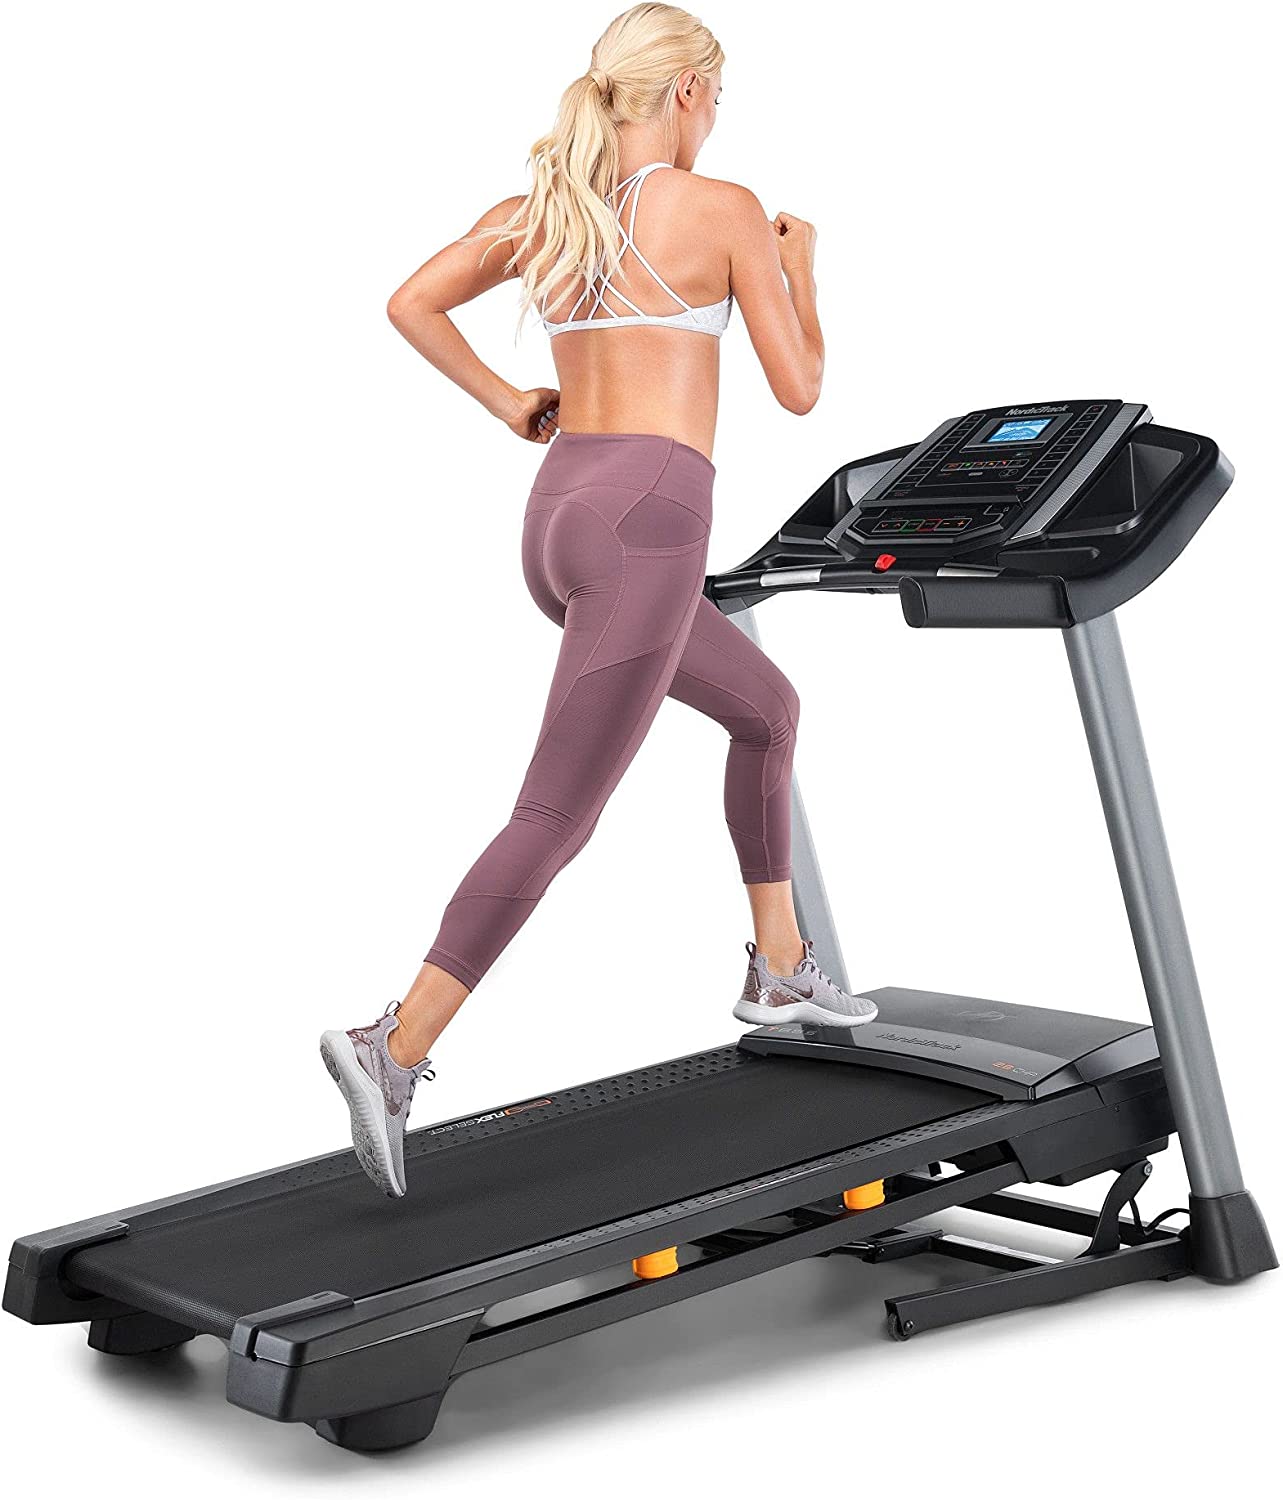 <br />
NordicTrack T Series Treadmills